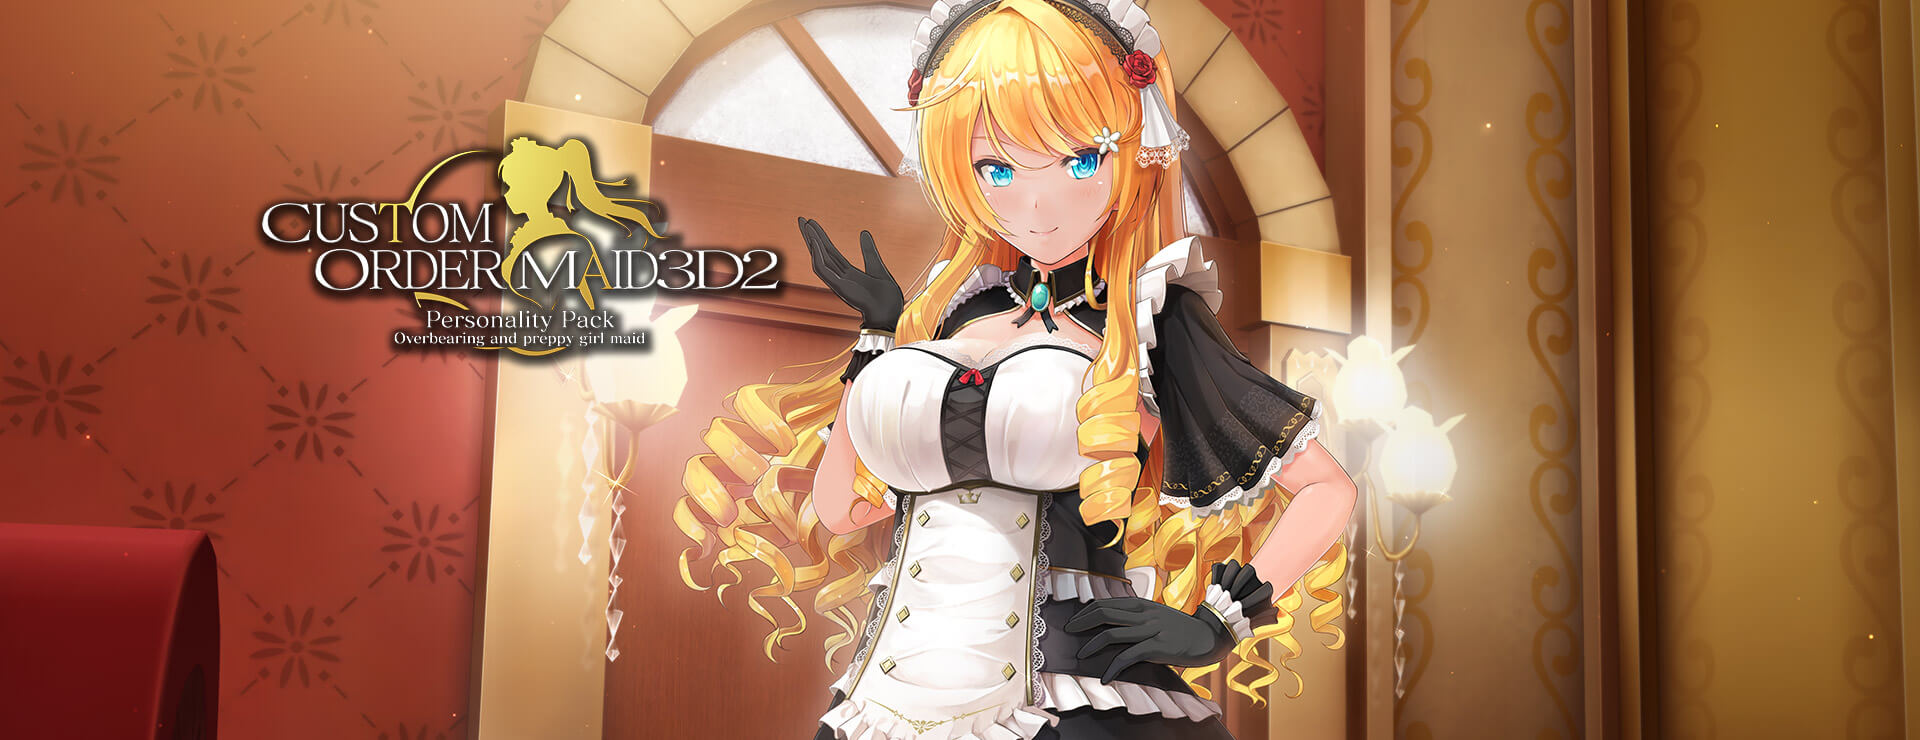 Custom Order Maid 3D2: Overbearing and Preppy Girl Maid DLC - Simulación Juego